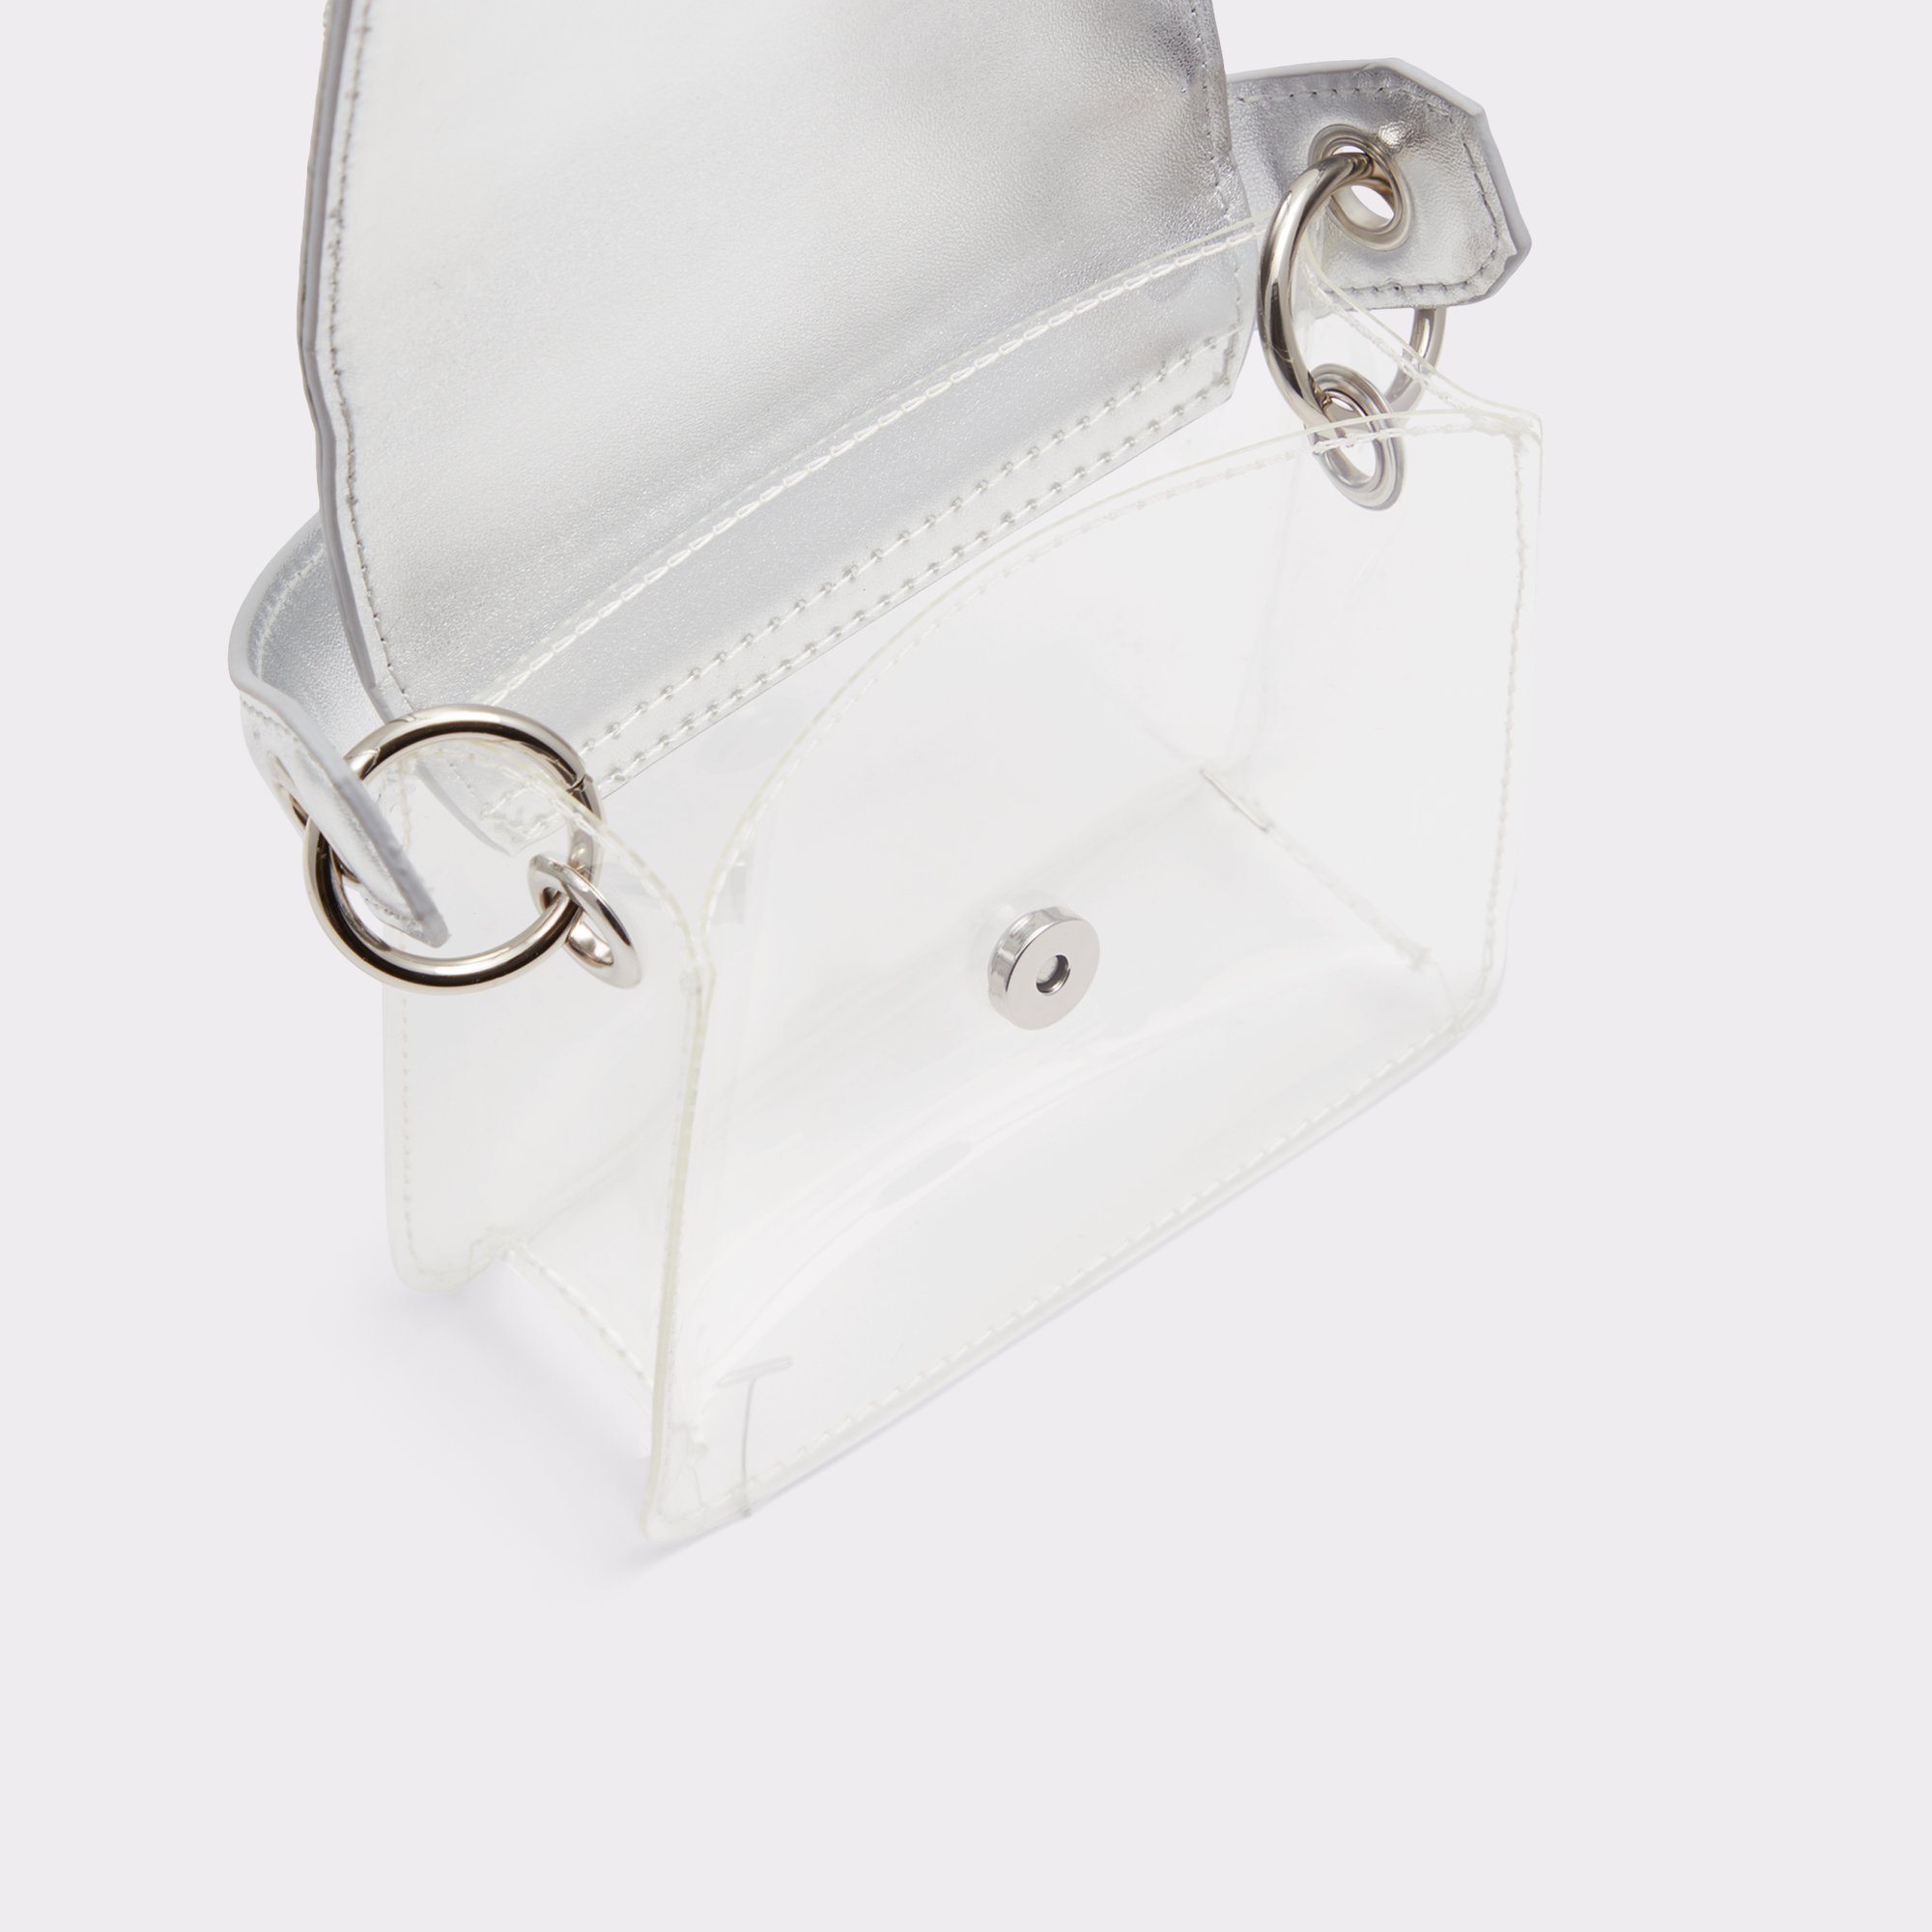 Fleurix Silver Women's Mini bags | ALDO US